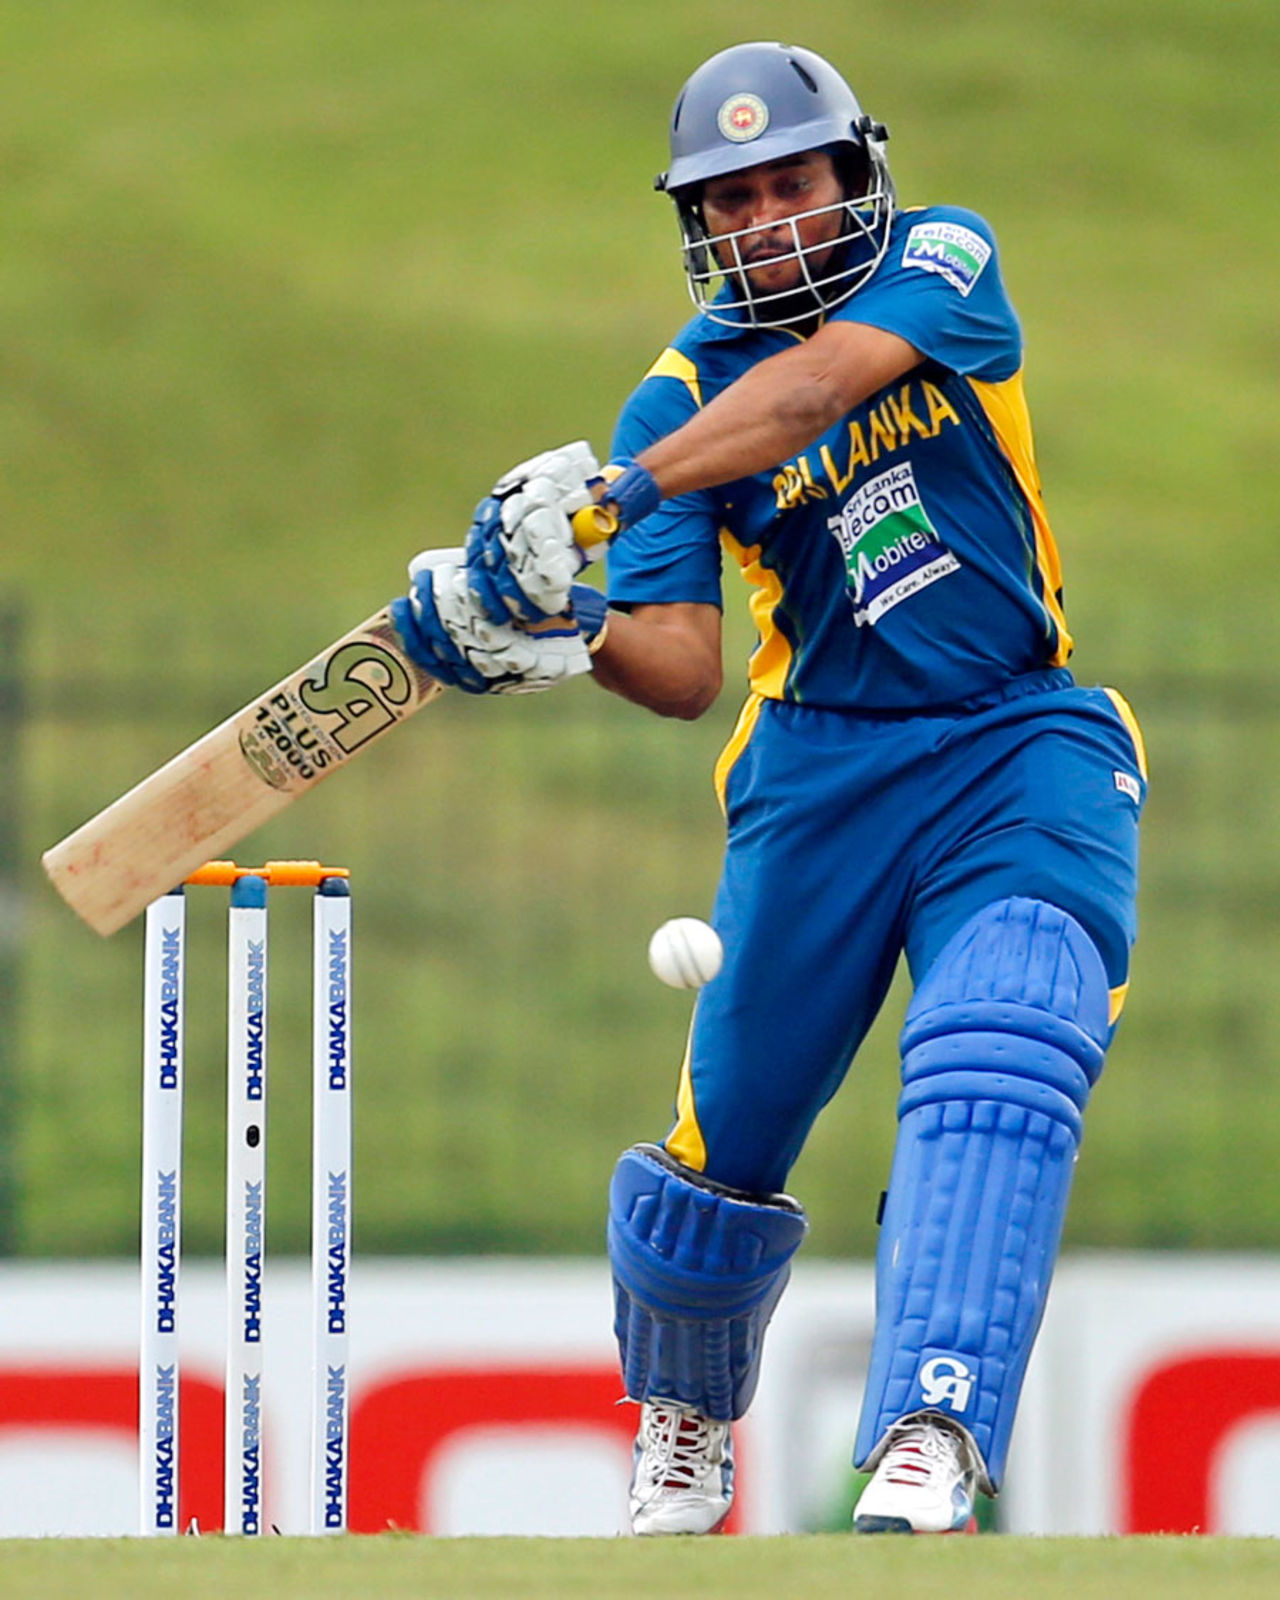 Tillakaratne Dilshan about to play, Sri Lanka v Bangladesh, 2nd ODI, Hambantota, March 25, 2013